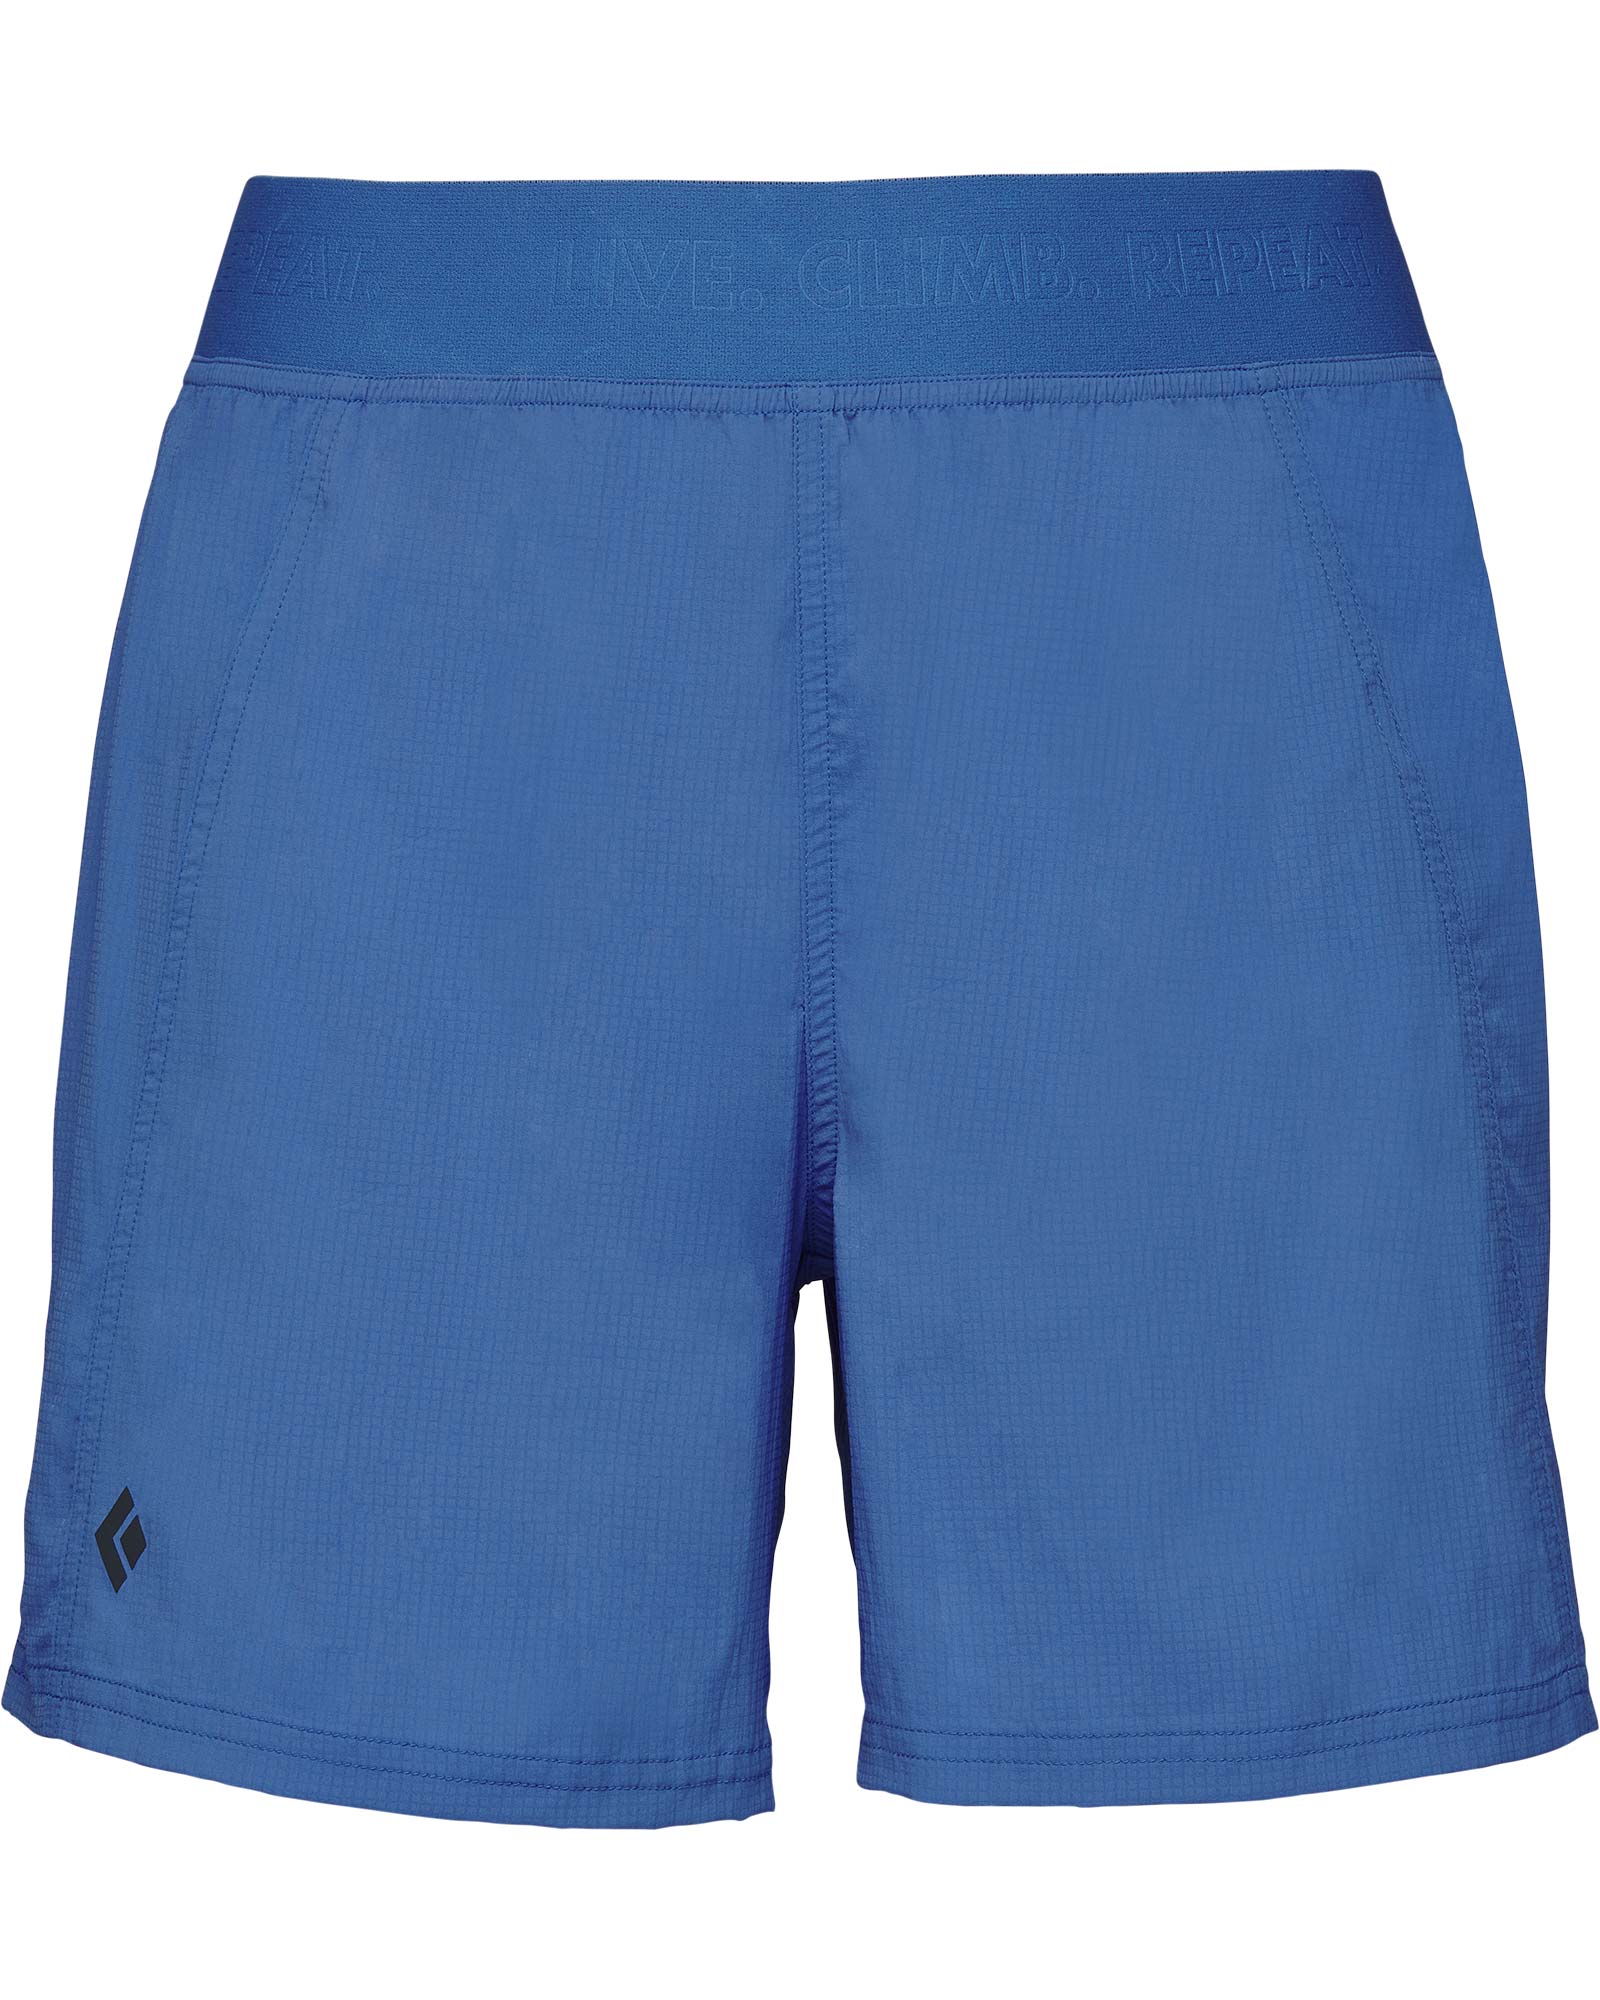 Black Diamond Women’s Sierra LT Shorts - Clean Blue M